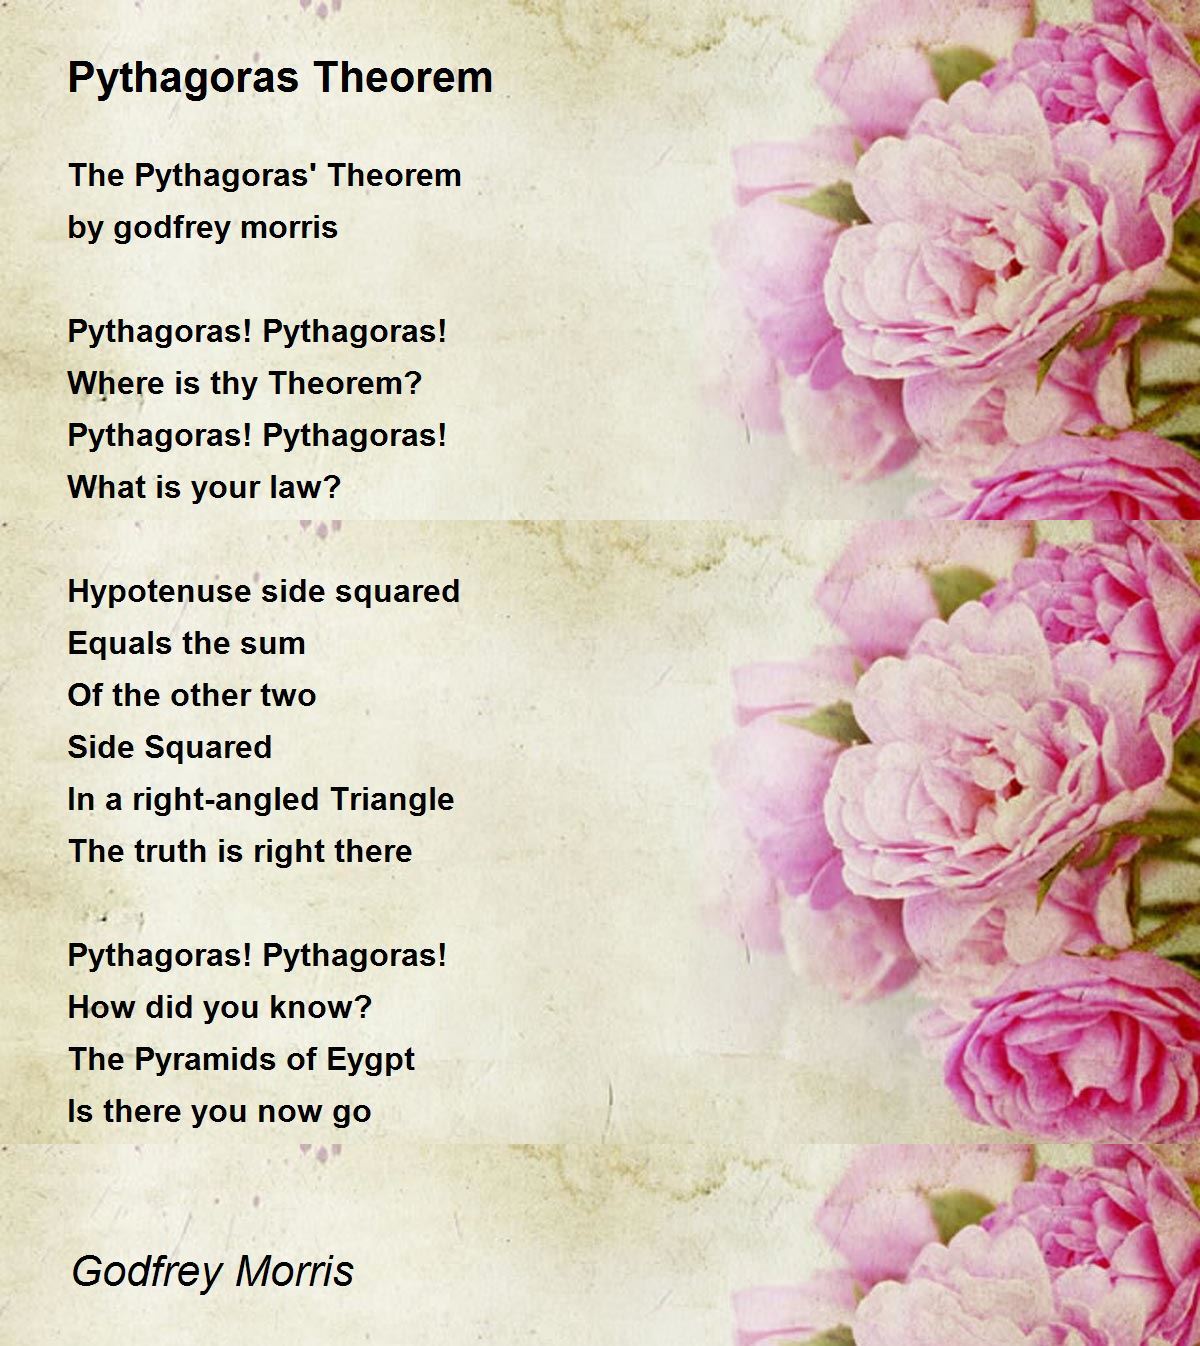 Pythagoras Theorem Poem by Godfrey Morris - Poem Hunter